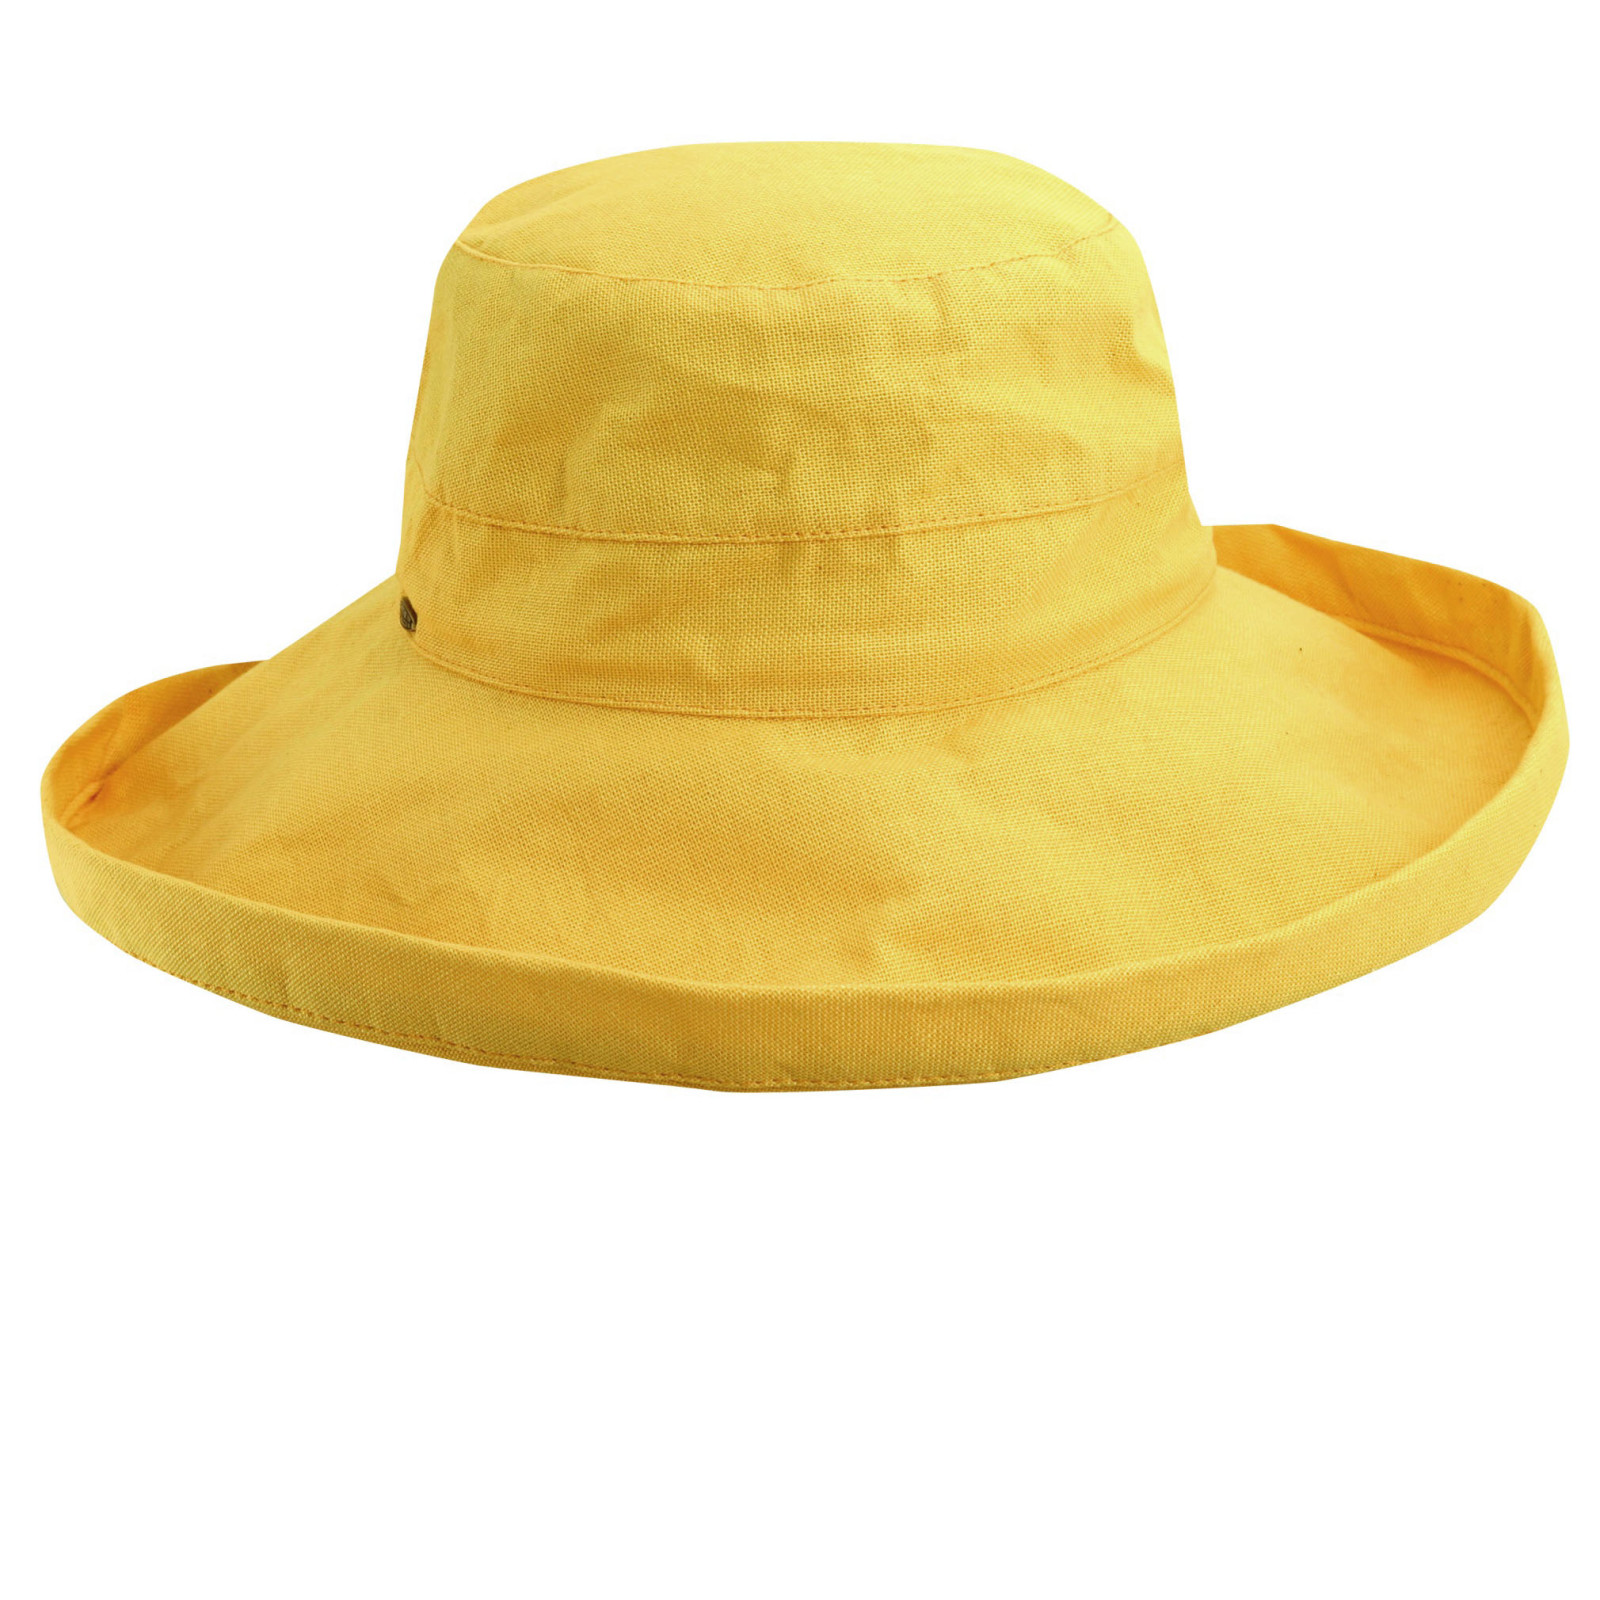 Cotton Sunhat with 3 inch Brim - Explorer Hats